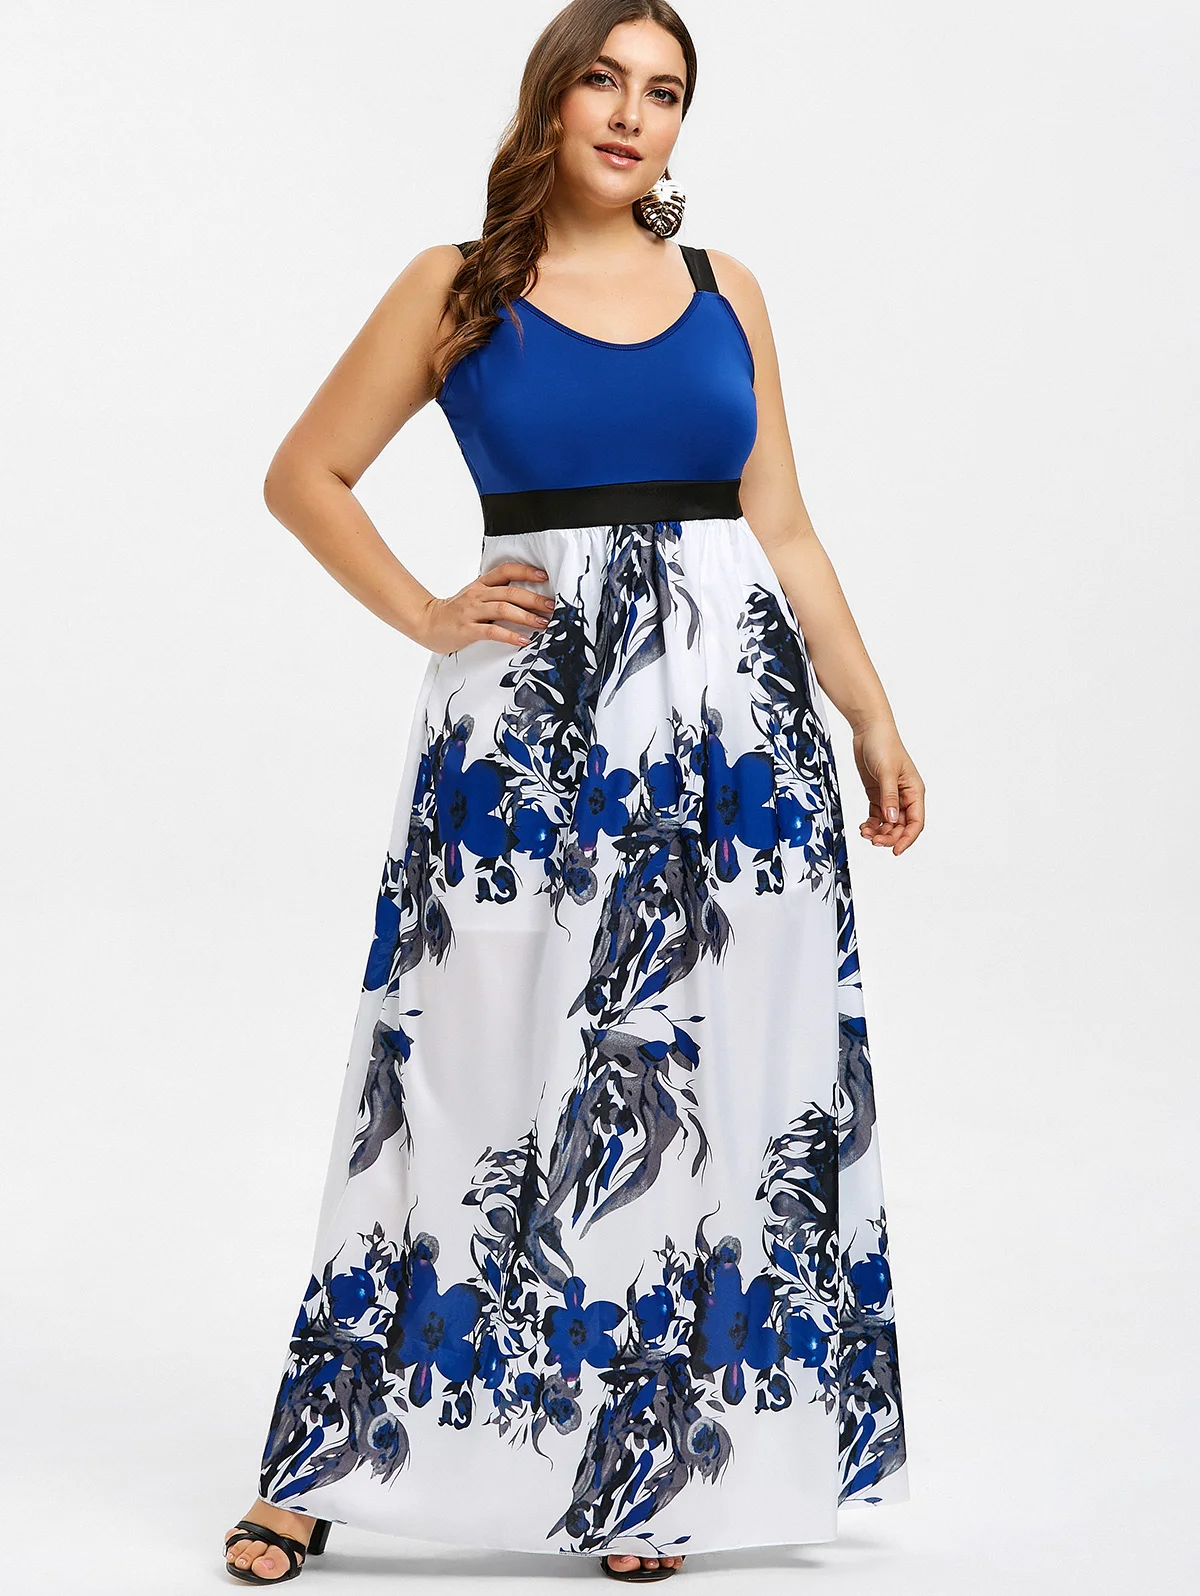 Aliexpress.com : Buy Wipalo Floral Print Plus Size Maxi Dress Casual ...